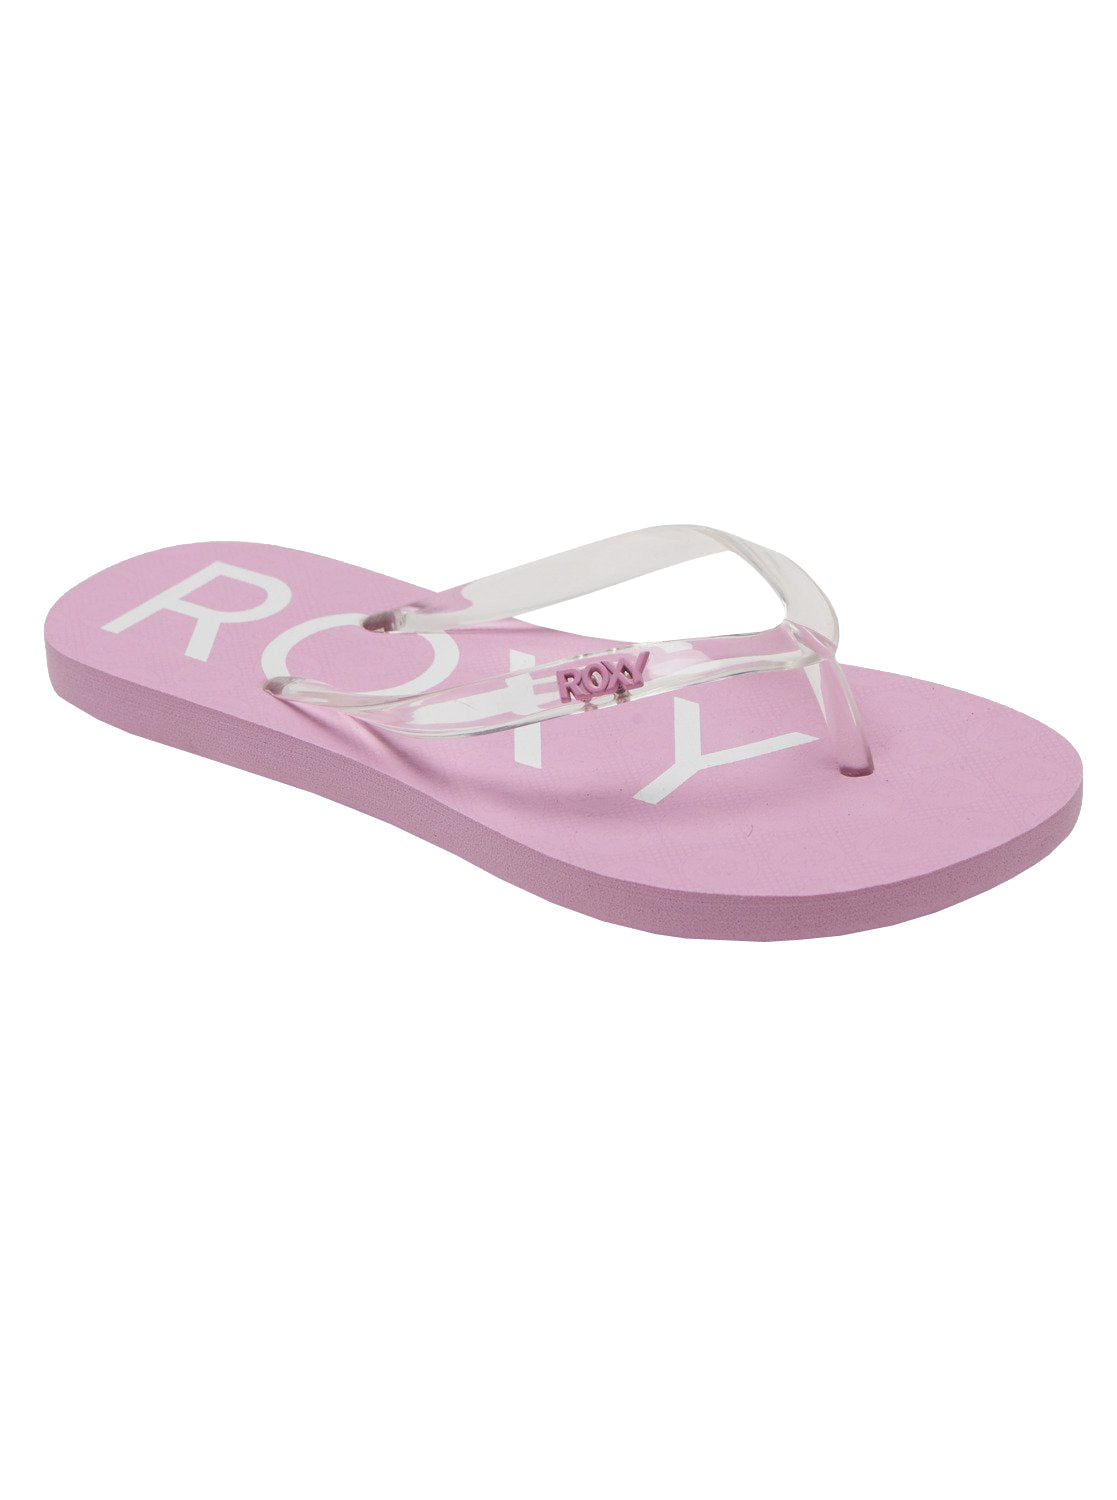 Roxy Viva Jelly Girls Sandal LRS-Lilac Rose 4 Y